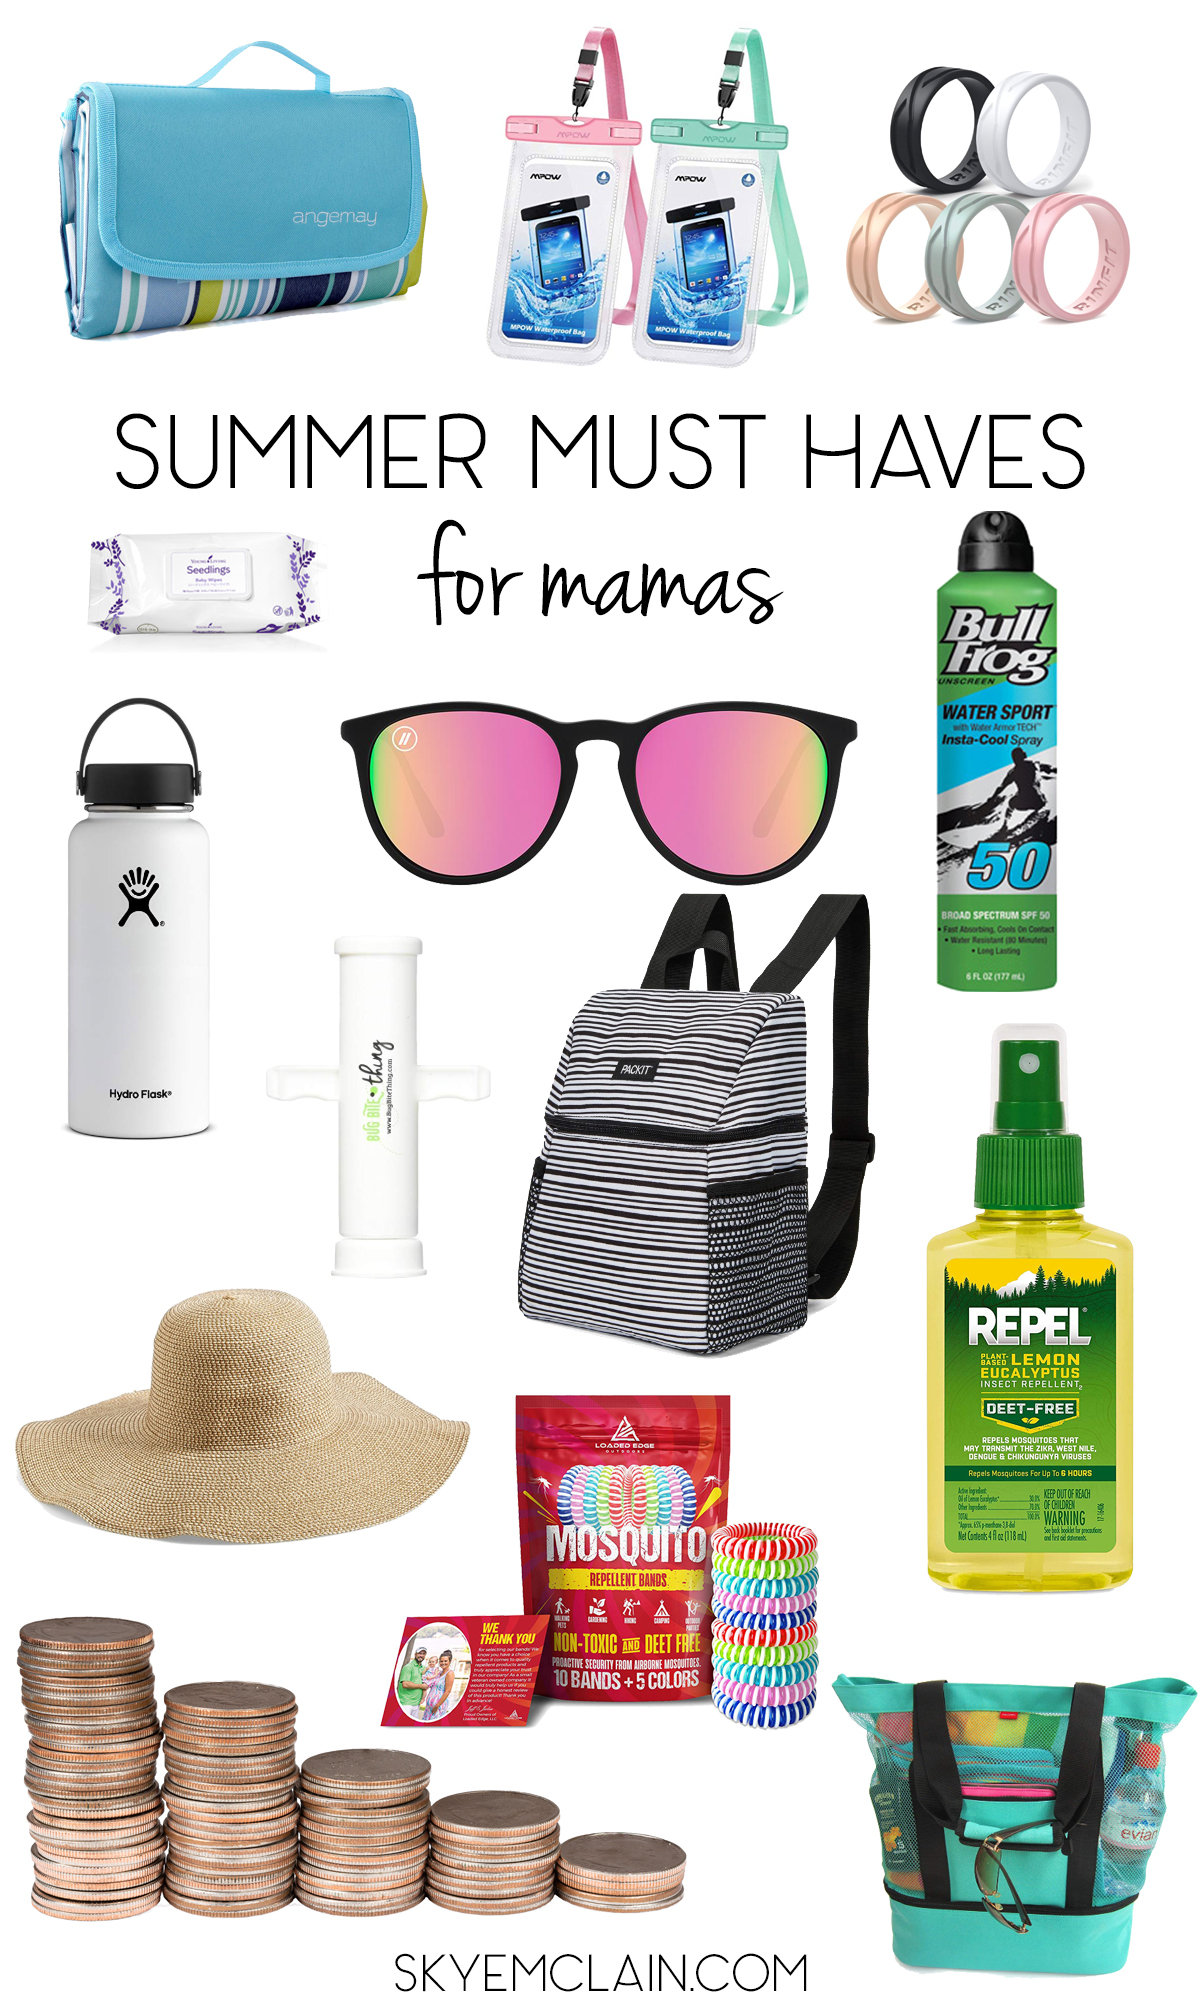 Summertime MUST have essentials